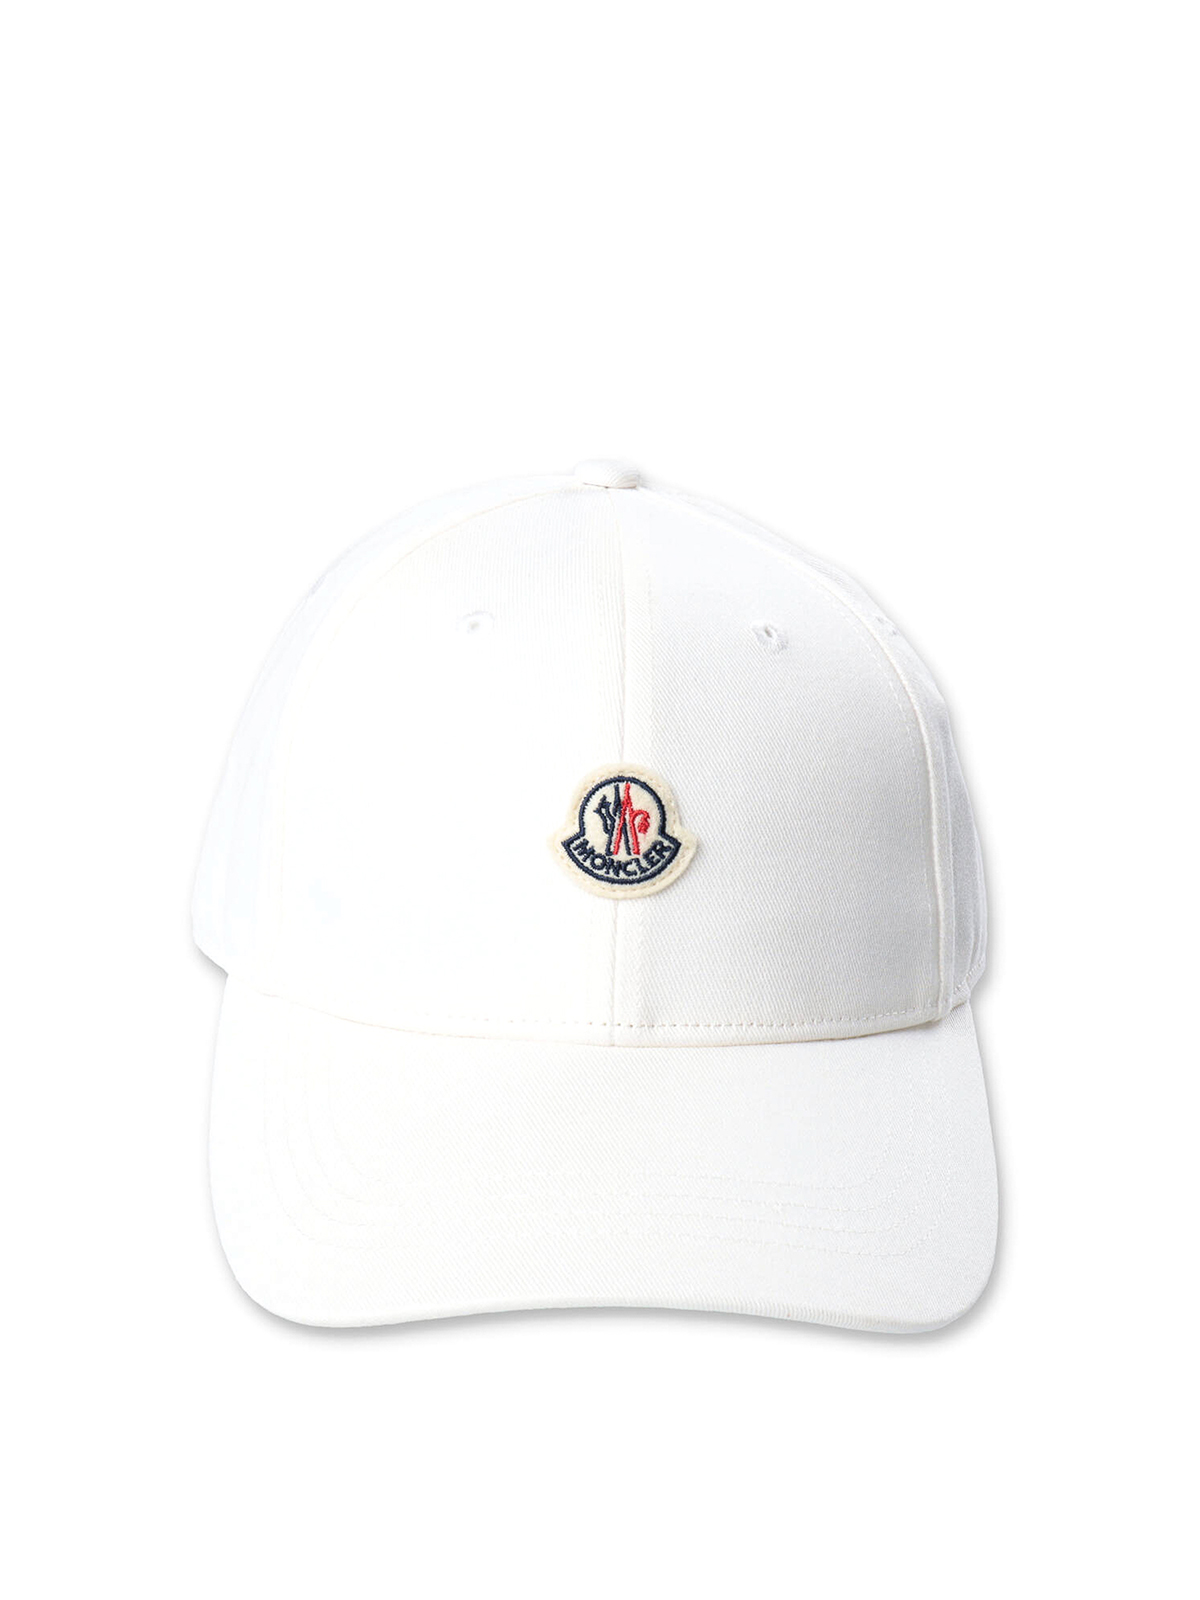 Hats and caps Moncler - Cotton baseball cap